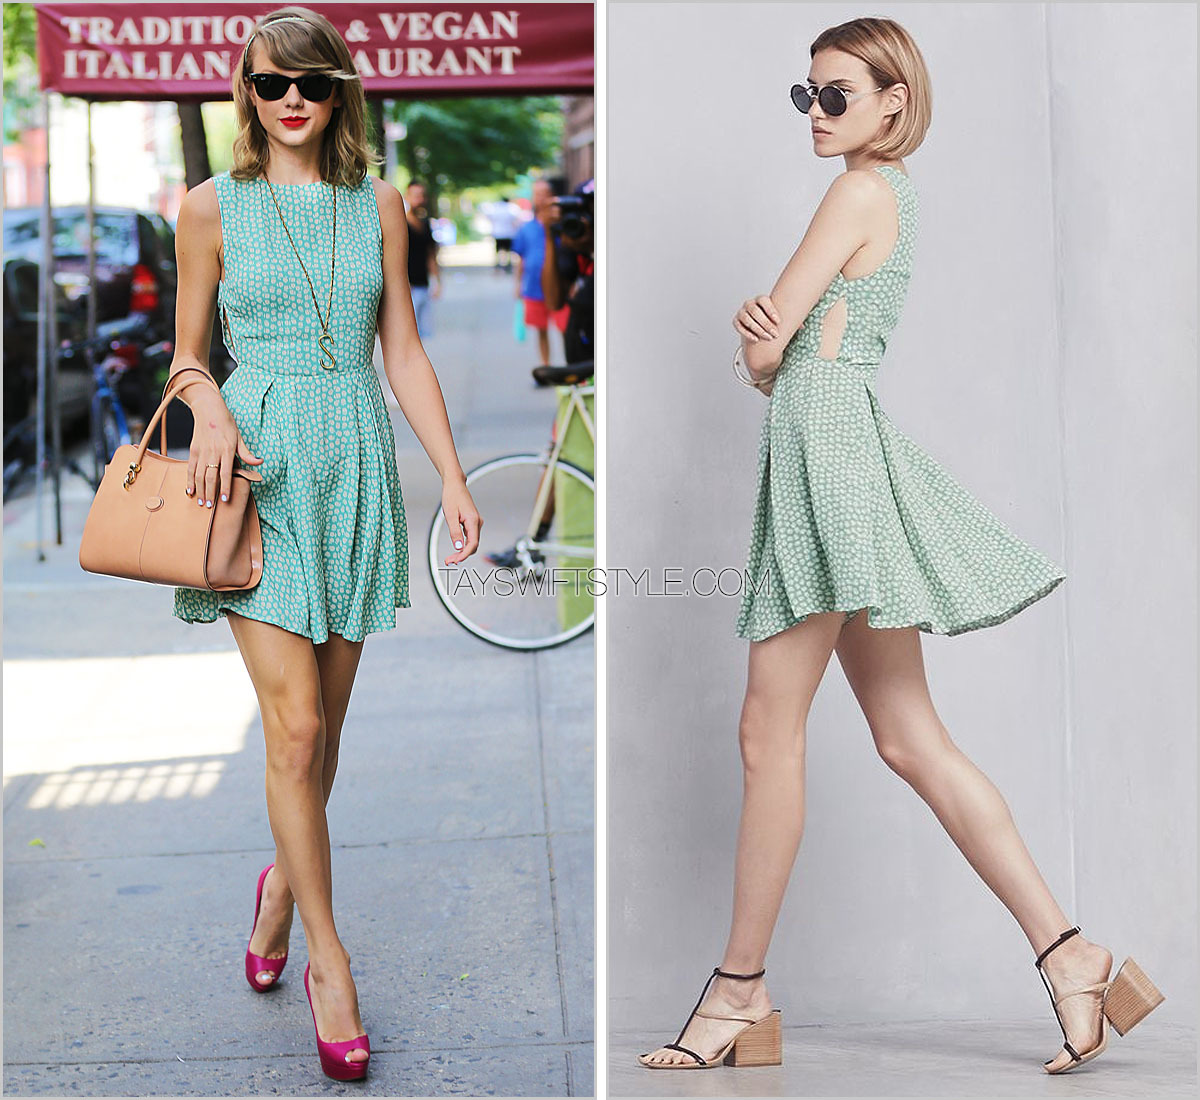 Taylor-Swift-GOTSNYC-The-Reformation-Gucci-Dolce-Gabbana-Tom